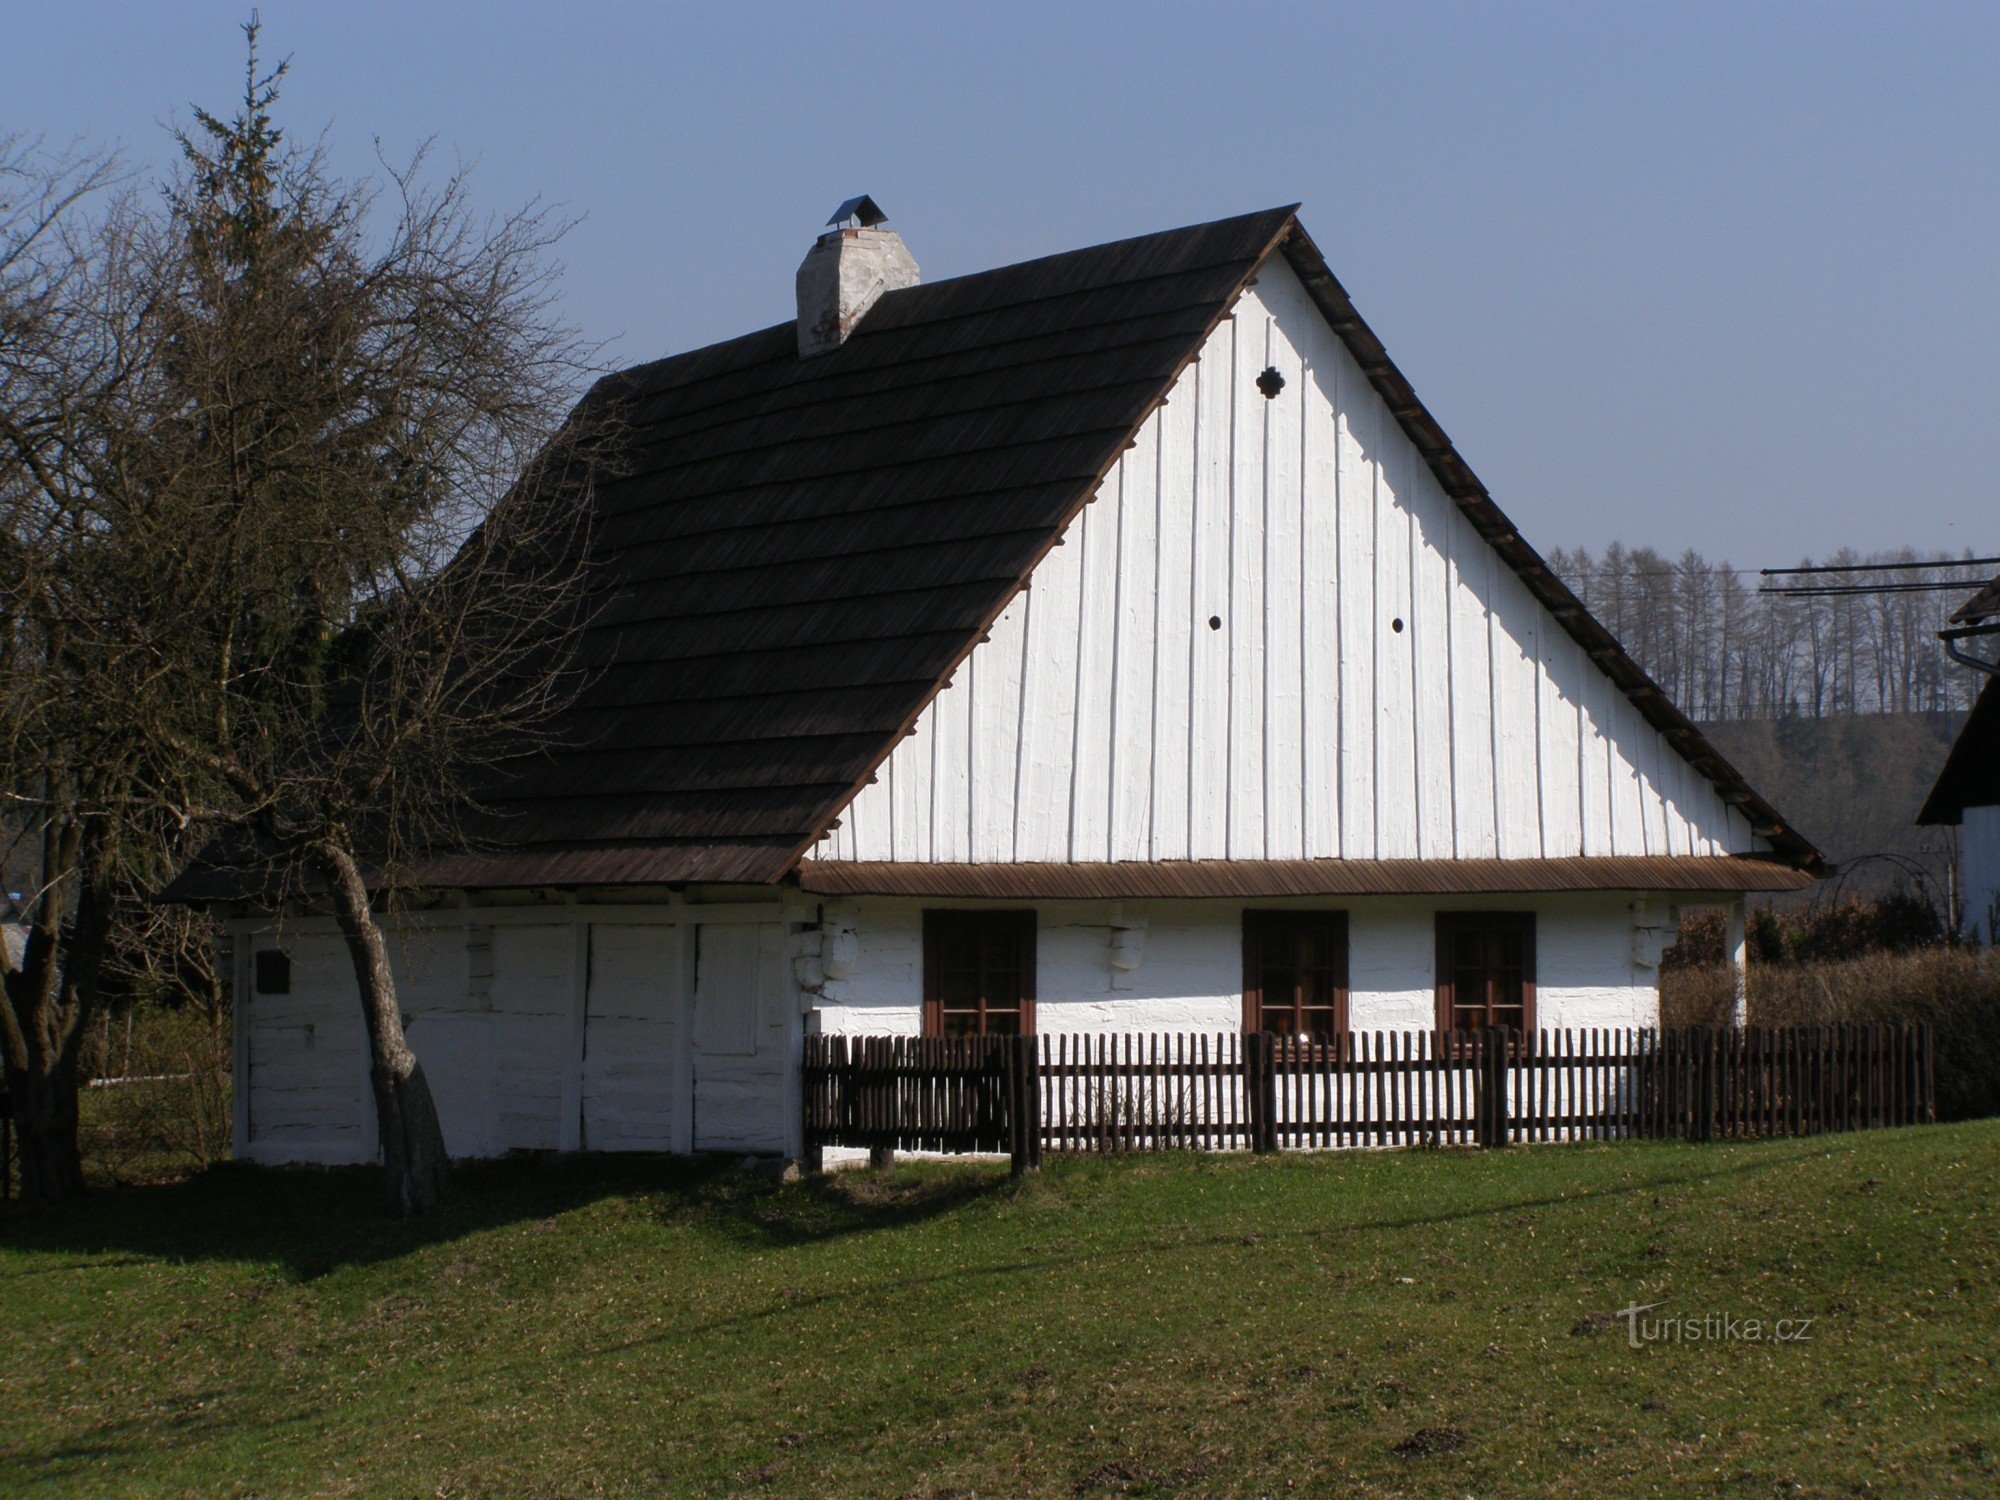 Žamberk (Helvíkovice) - fødestedet for Prokop Diviš